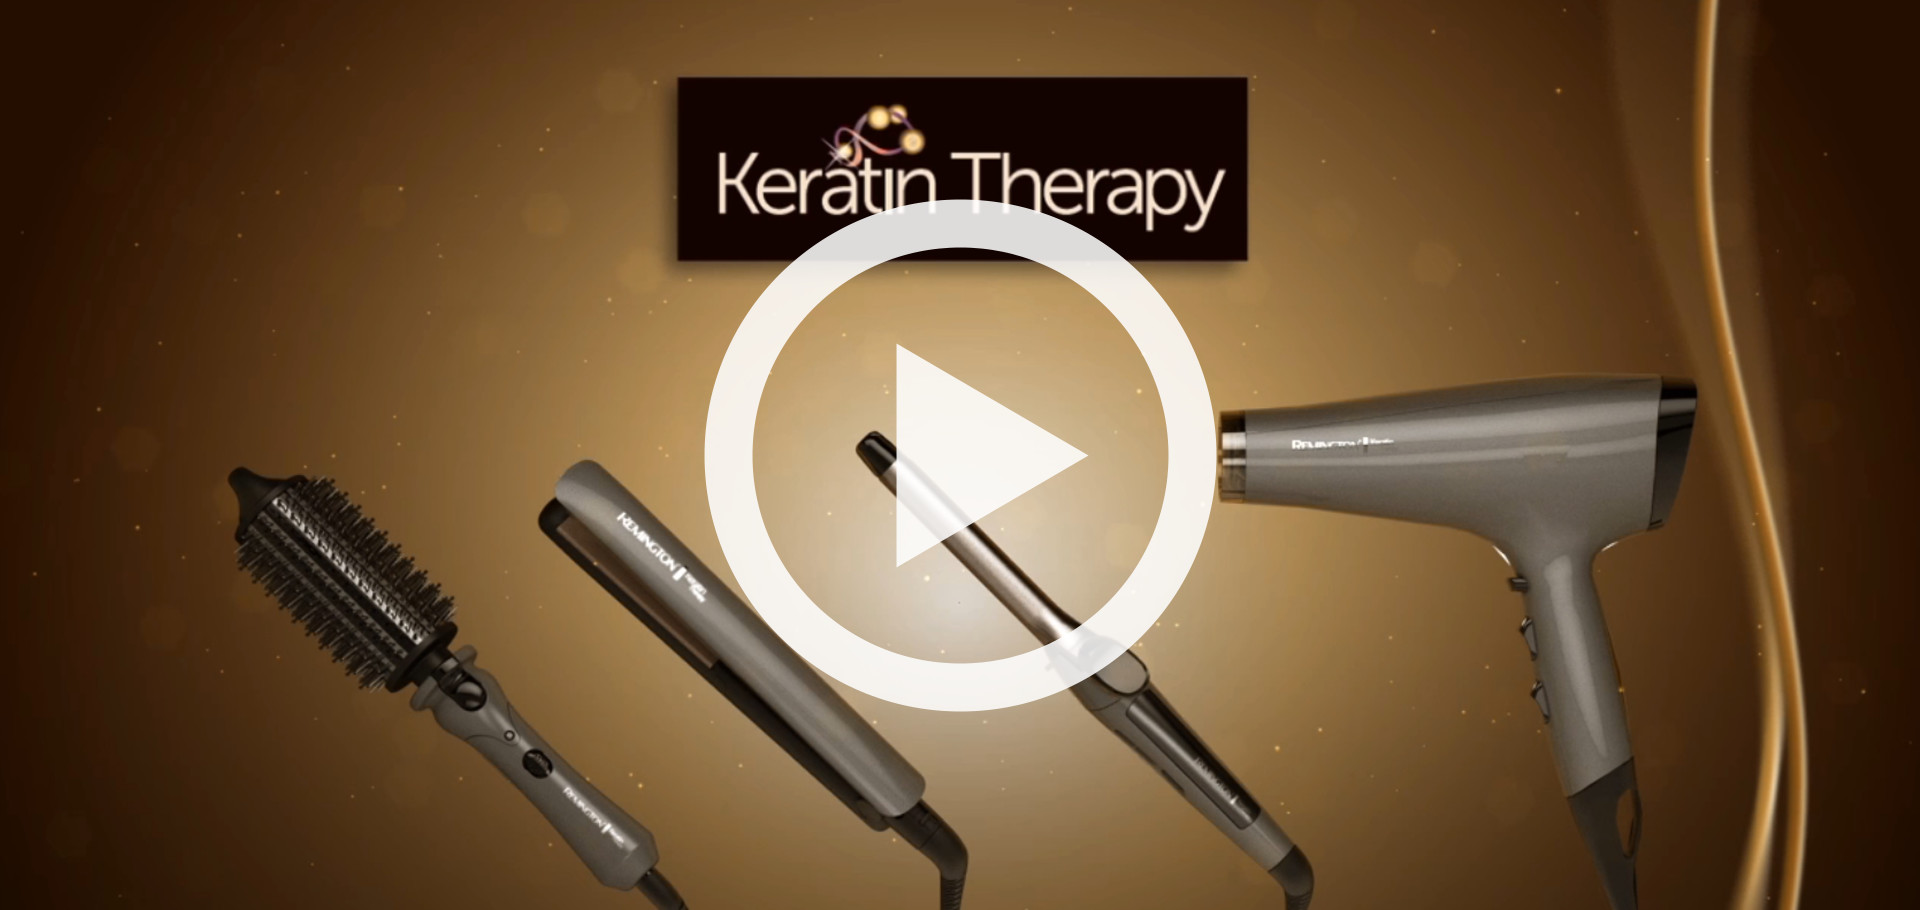 Remington S8590 Keratin Therapy 1 Flat Iron 